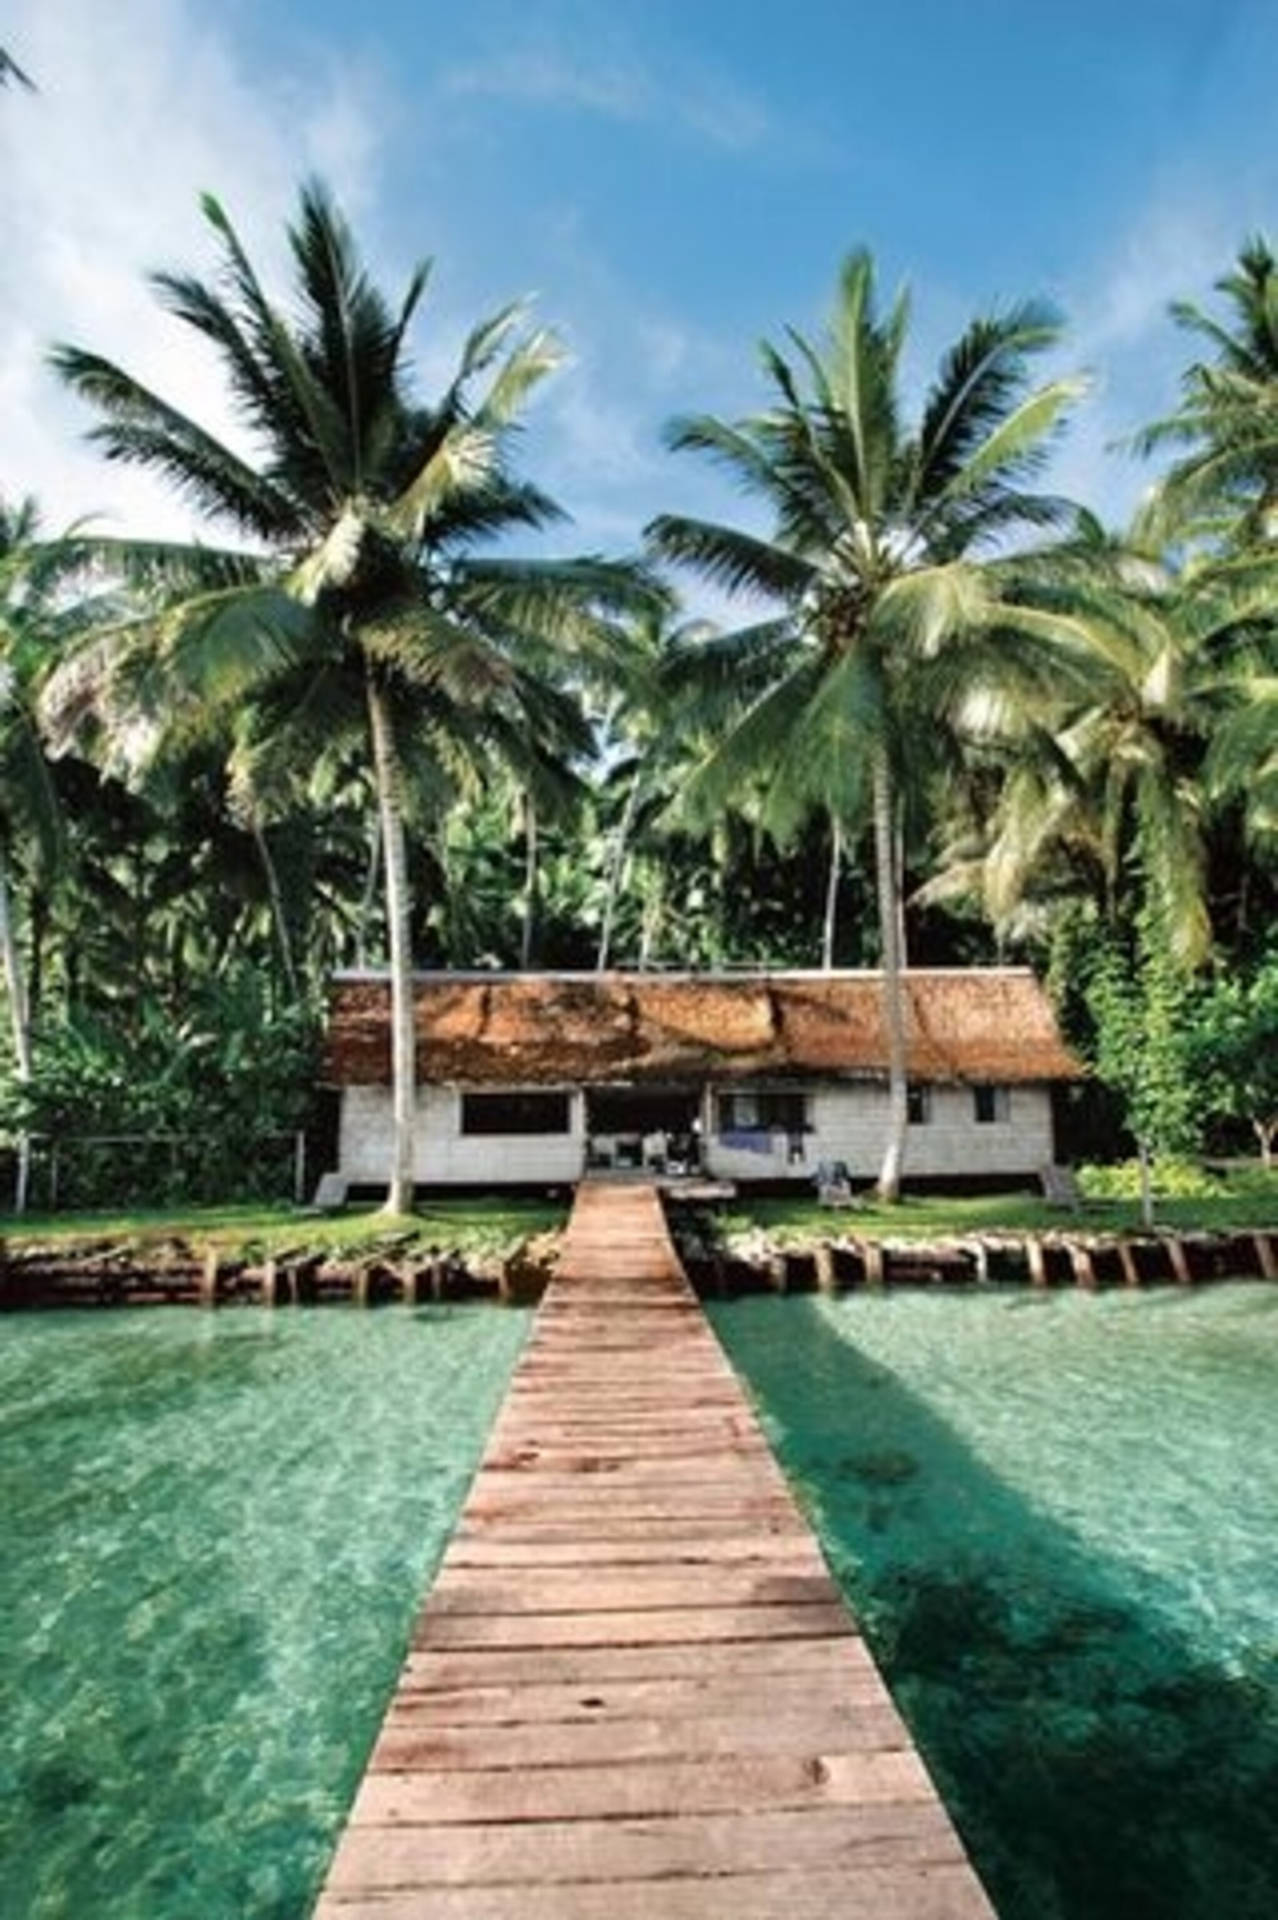 Solomon Islands Pathway To The Sea Wallpaper